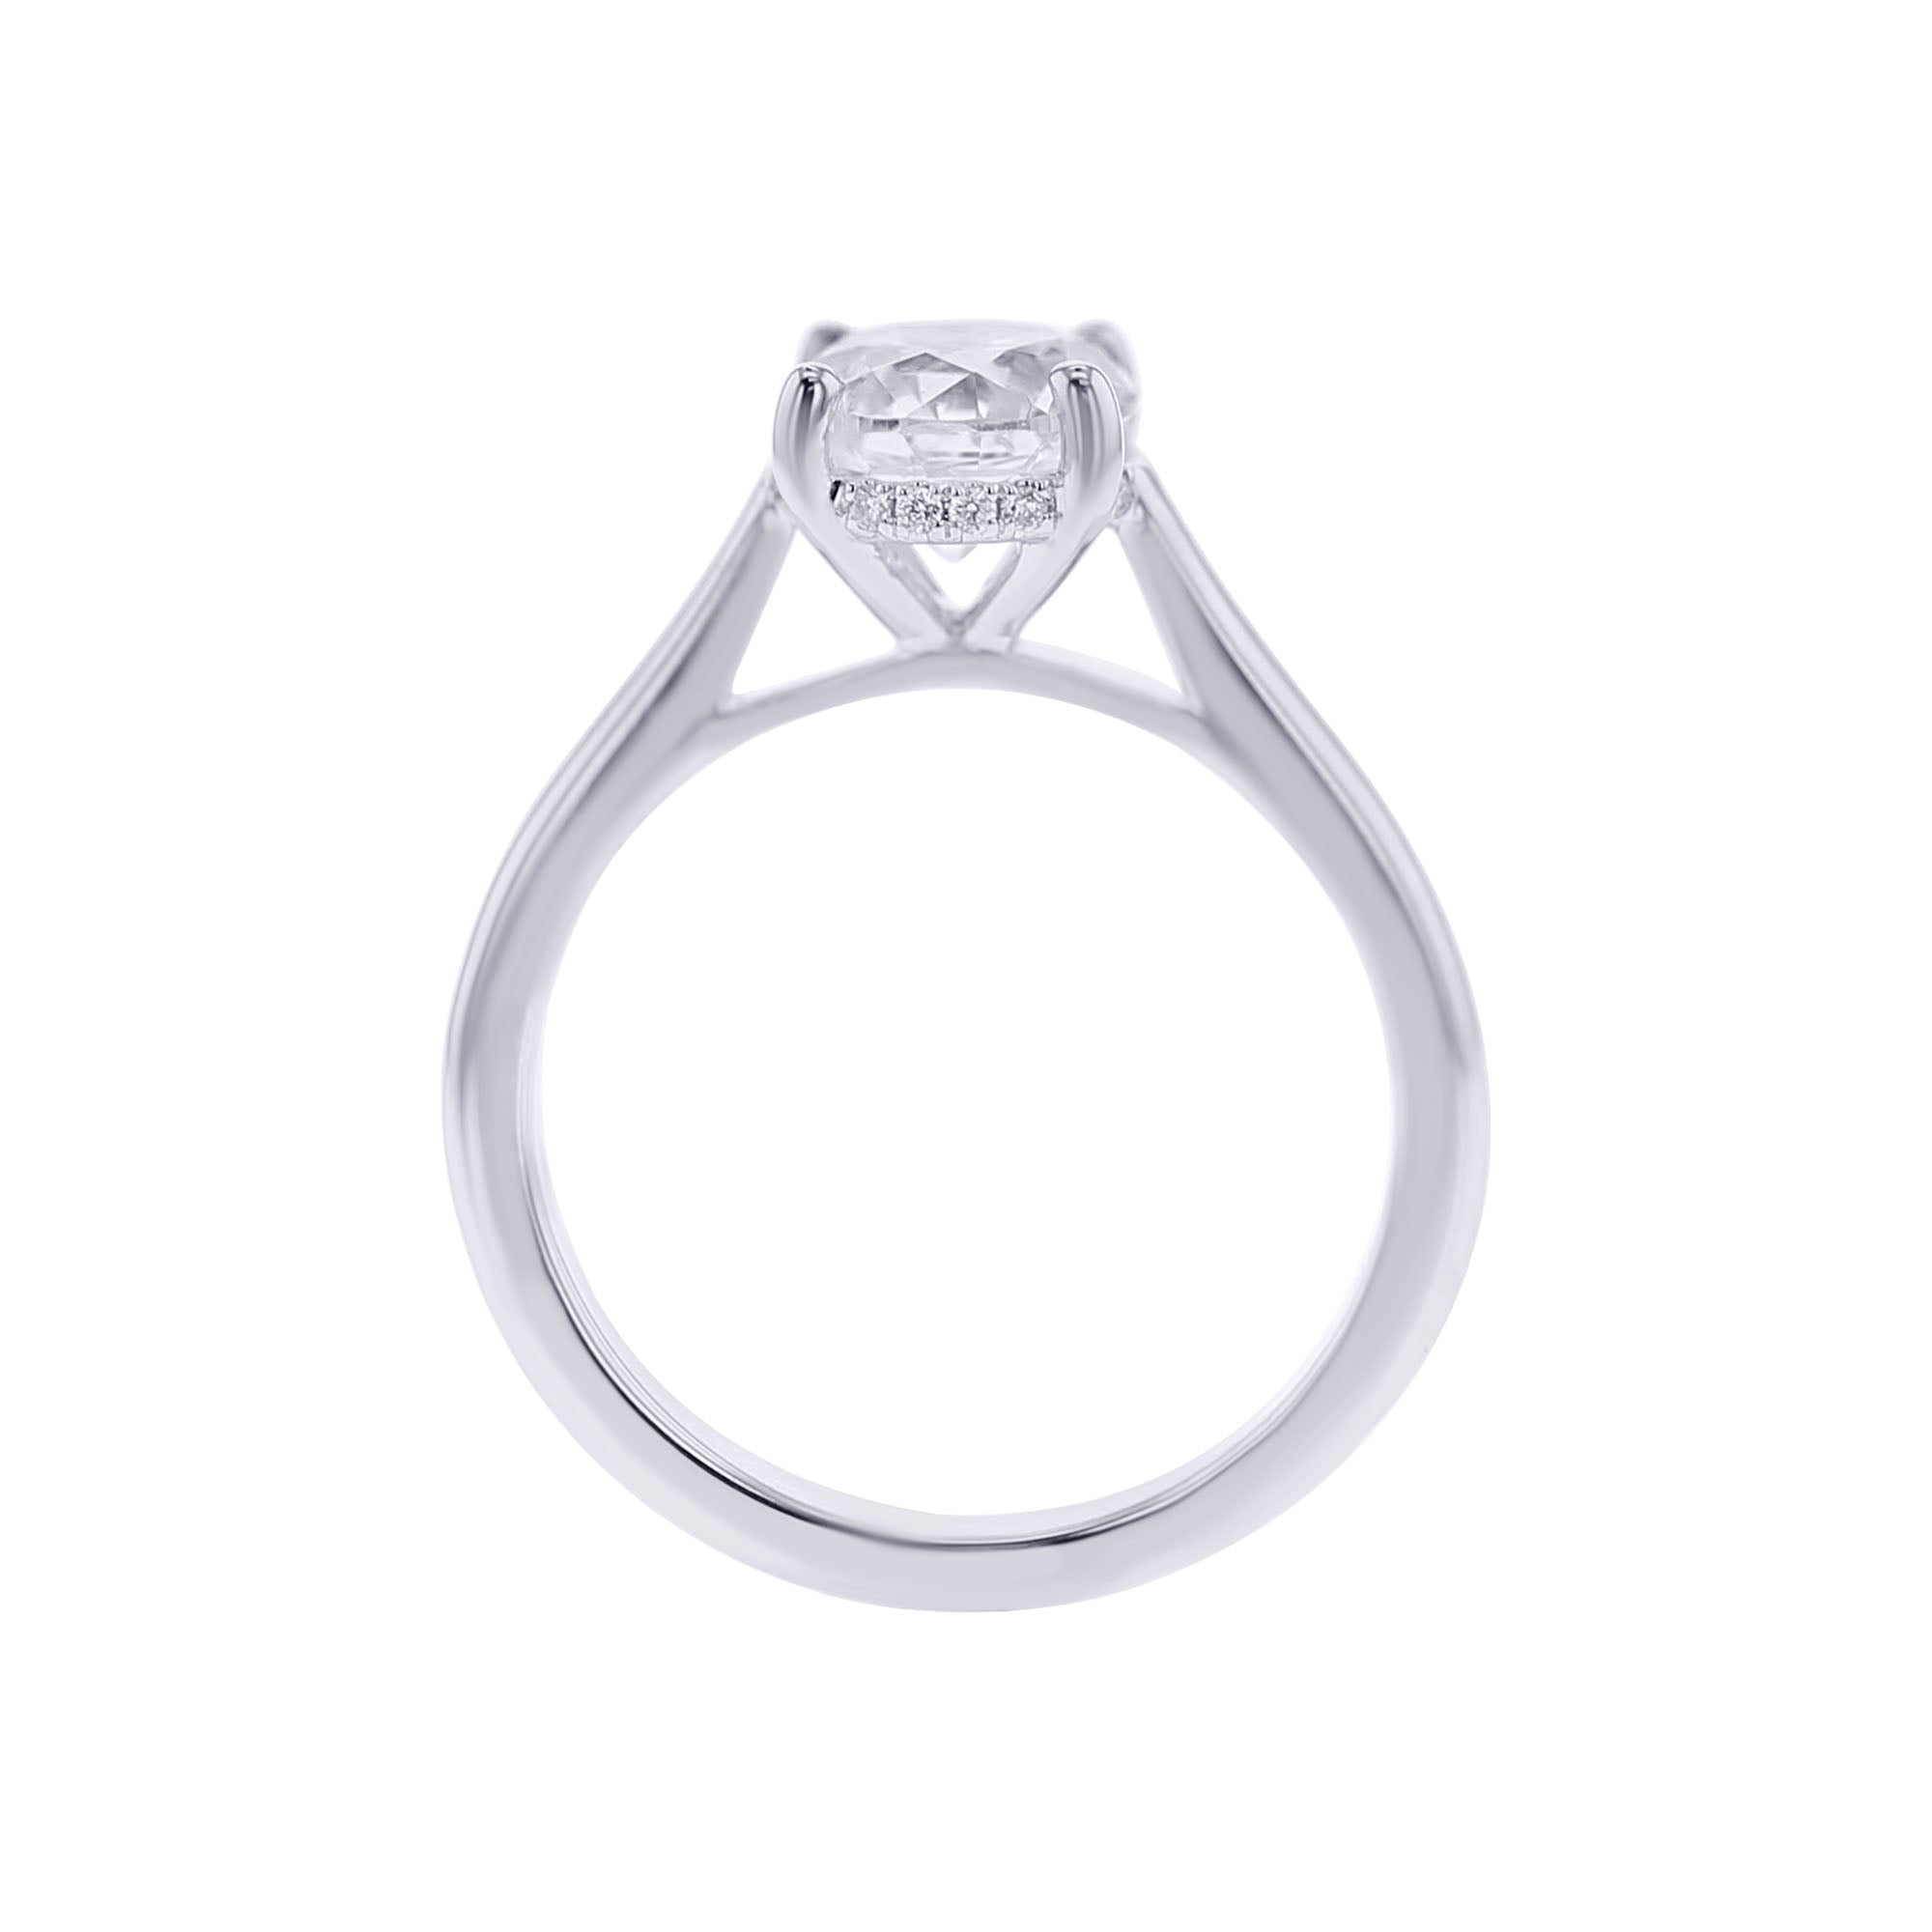 Margate Ready for Love Diamond Engagement Ring